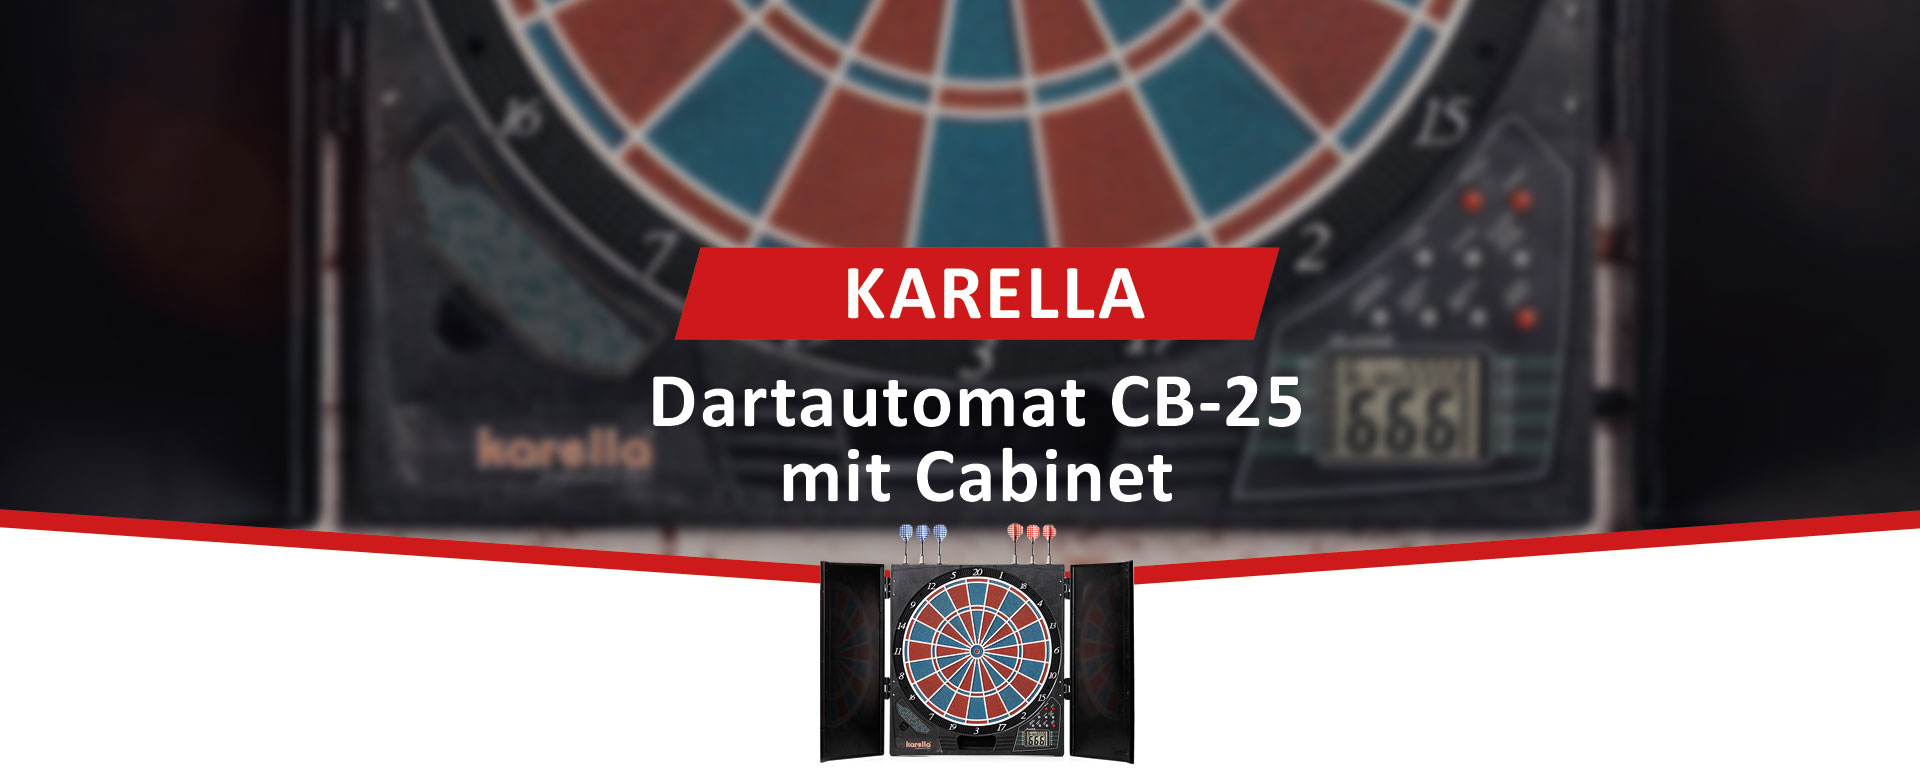 2 Satz KARELLA Softdarts Dartautomat Cabinet + inkl. CB-25